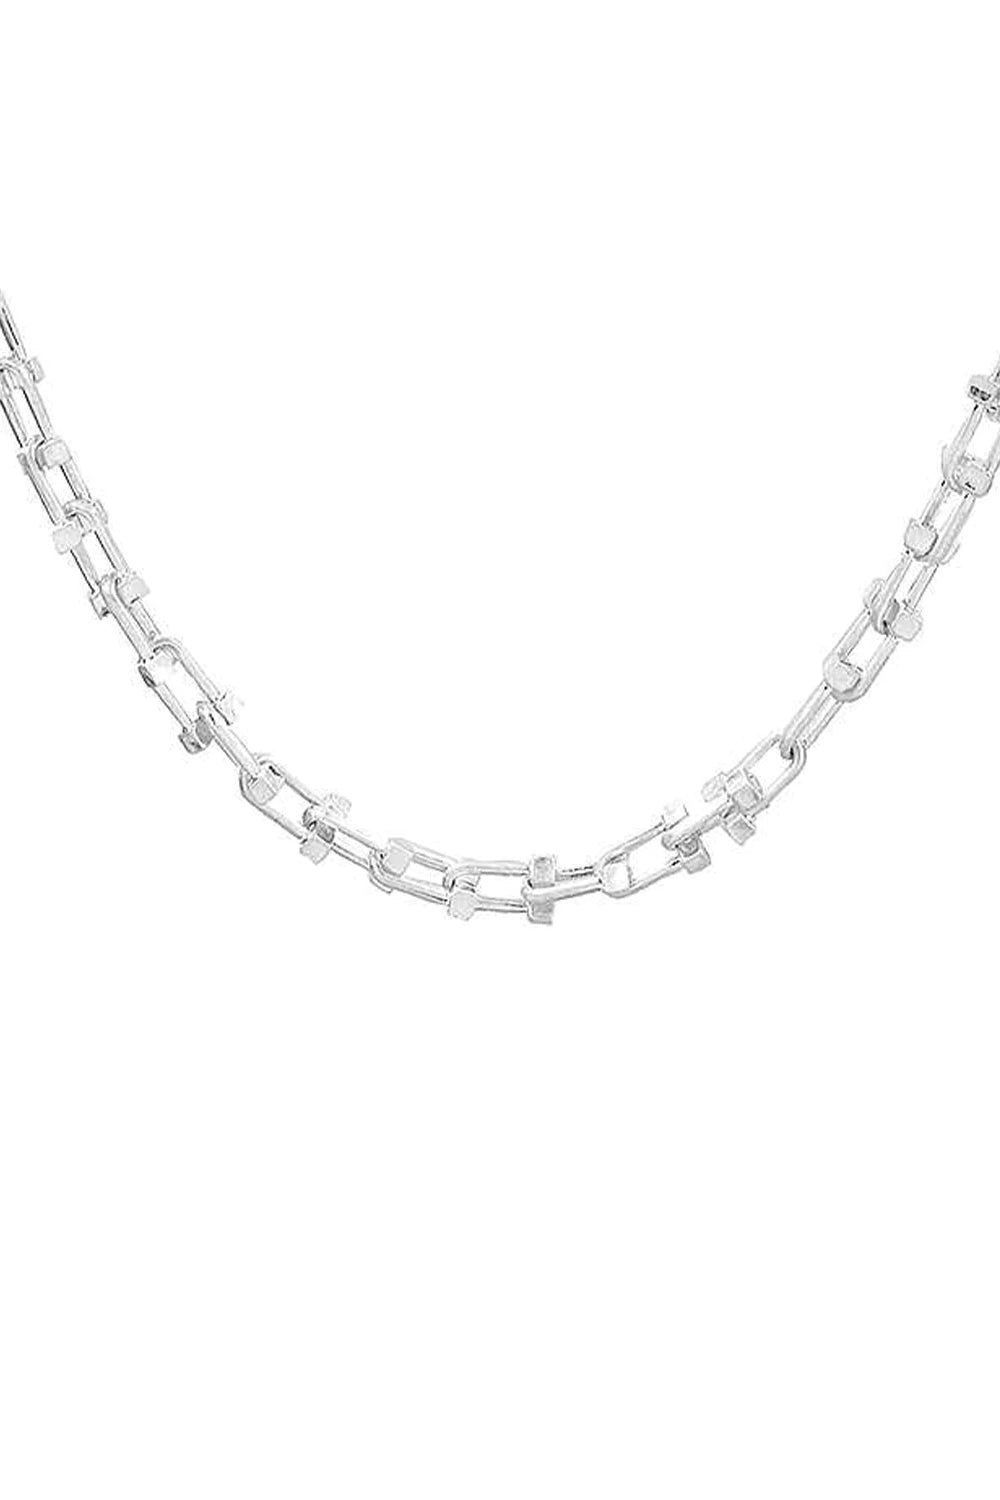 Stylish Chain Link Hematite Necklace